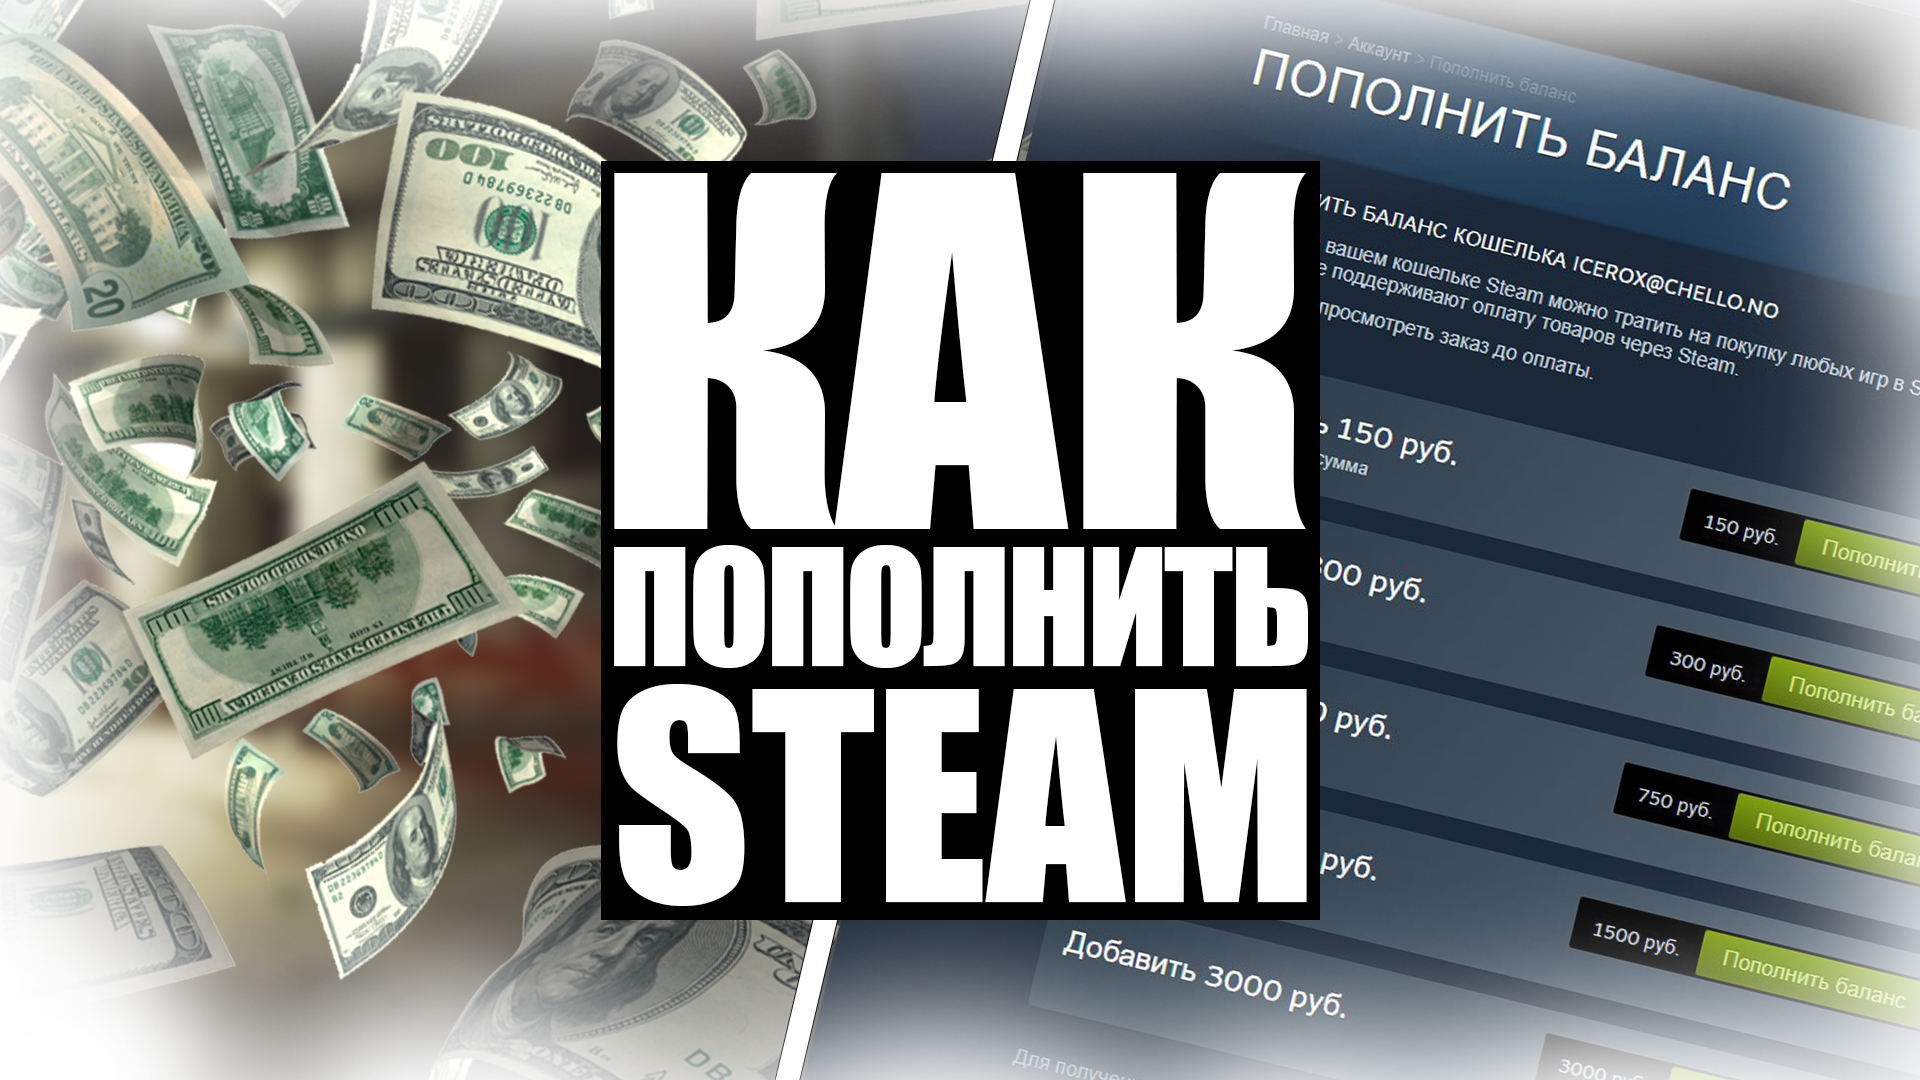 1000 рублей на steam фото 41